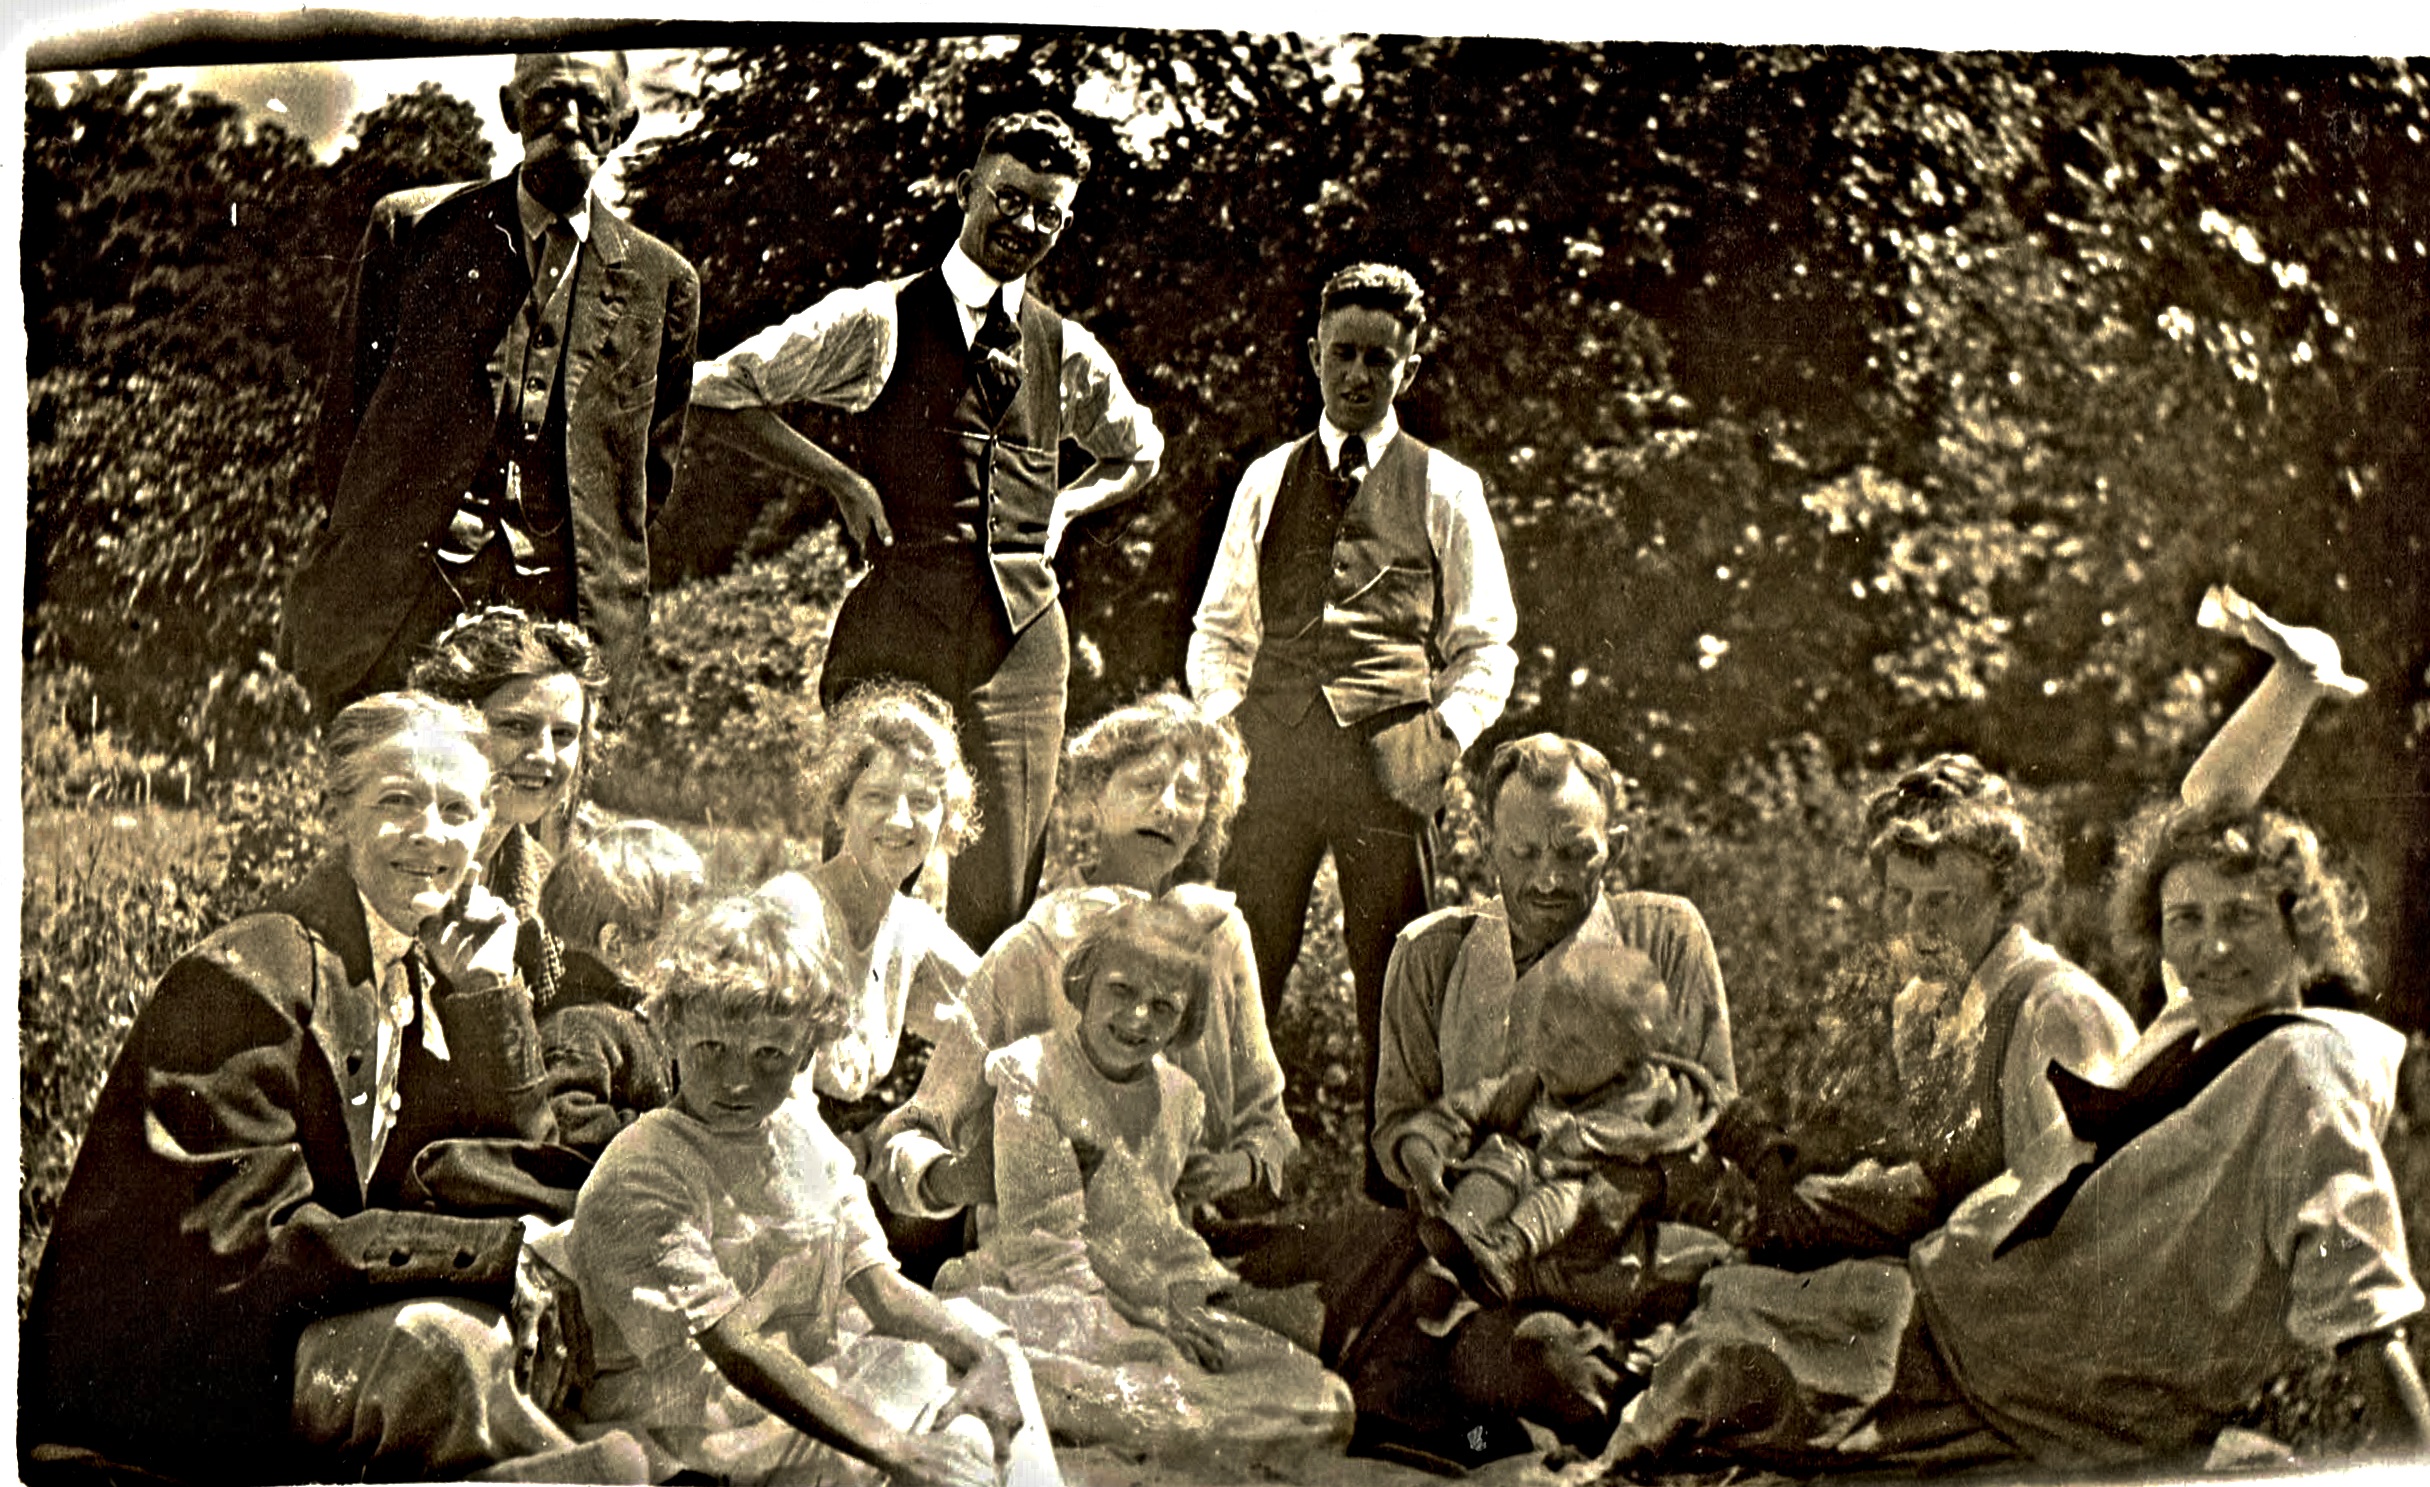 Circa 1920 group photo of Hoyts & Goodriches